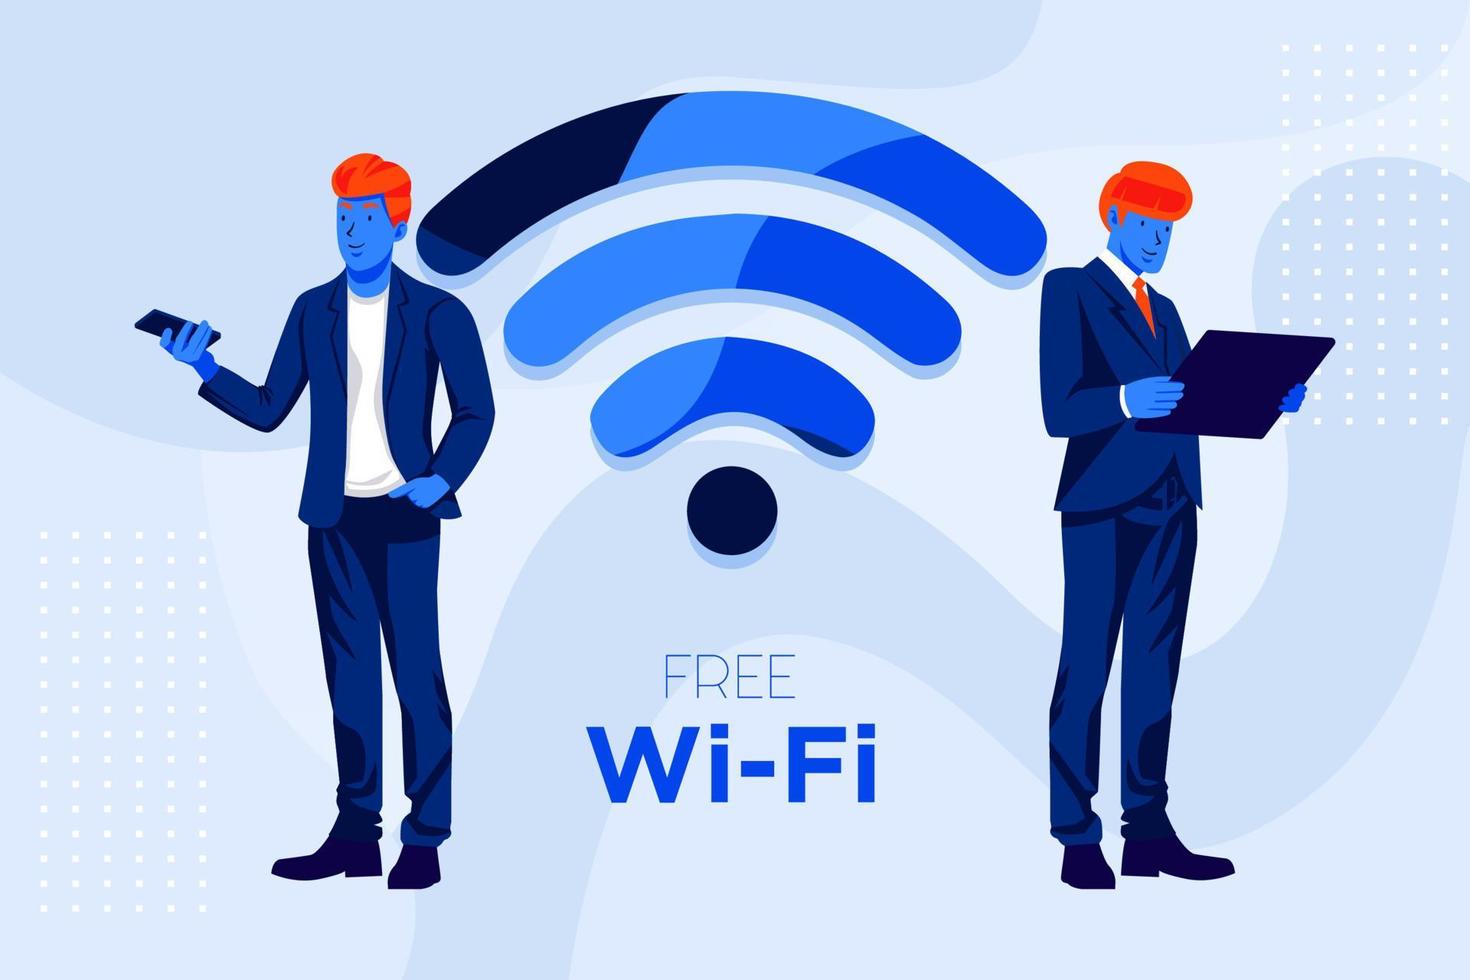 zakenman met smartphone en tablet met gratis wi-fi symbool blauwe kleur. vector